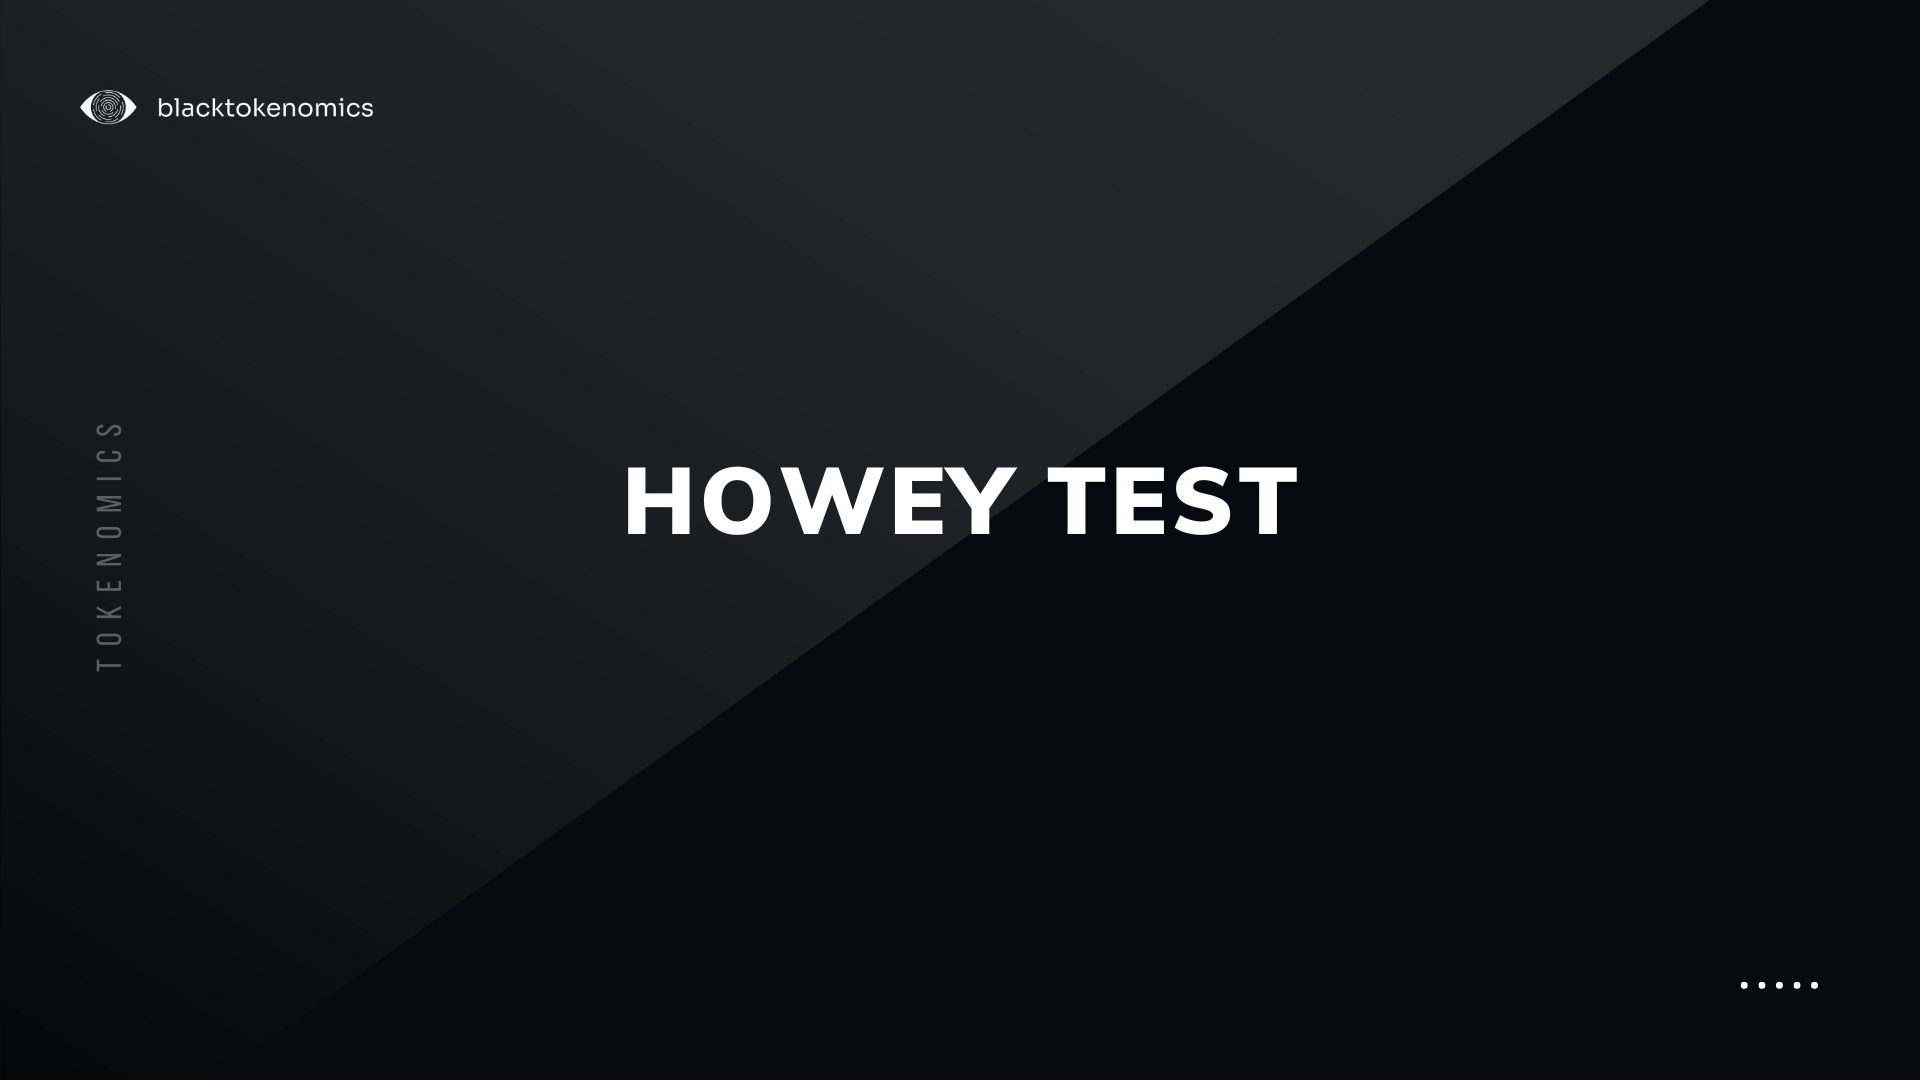 Howey Test - Featured Image Blacktokenomics